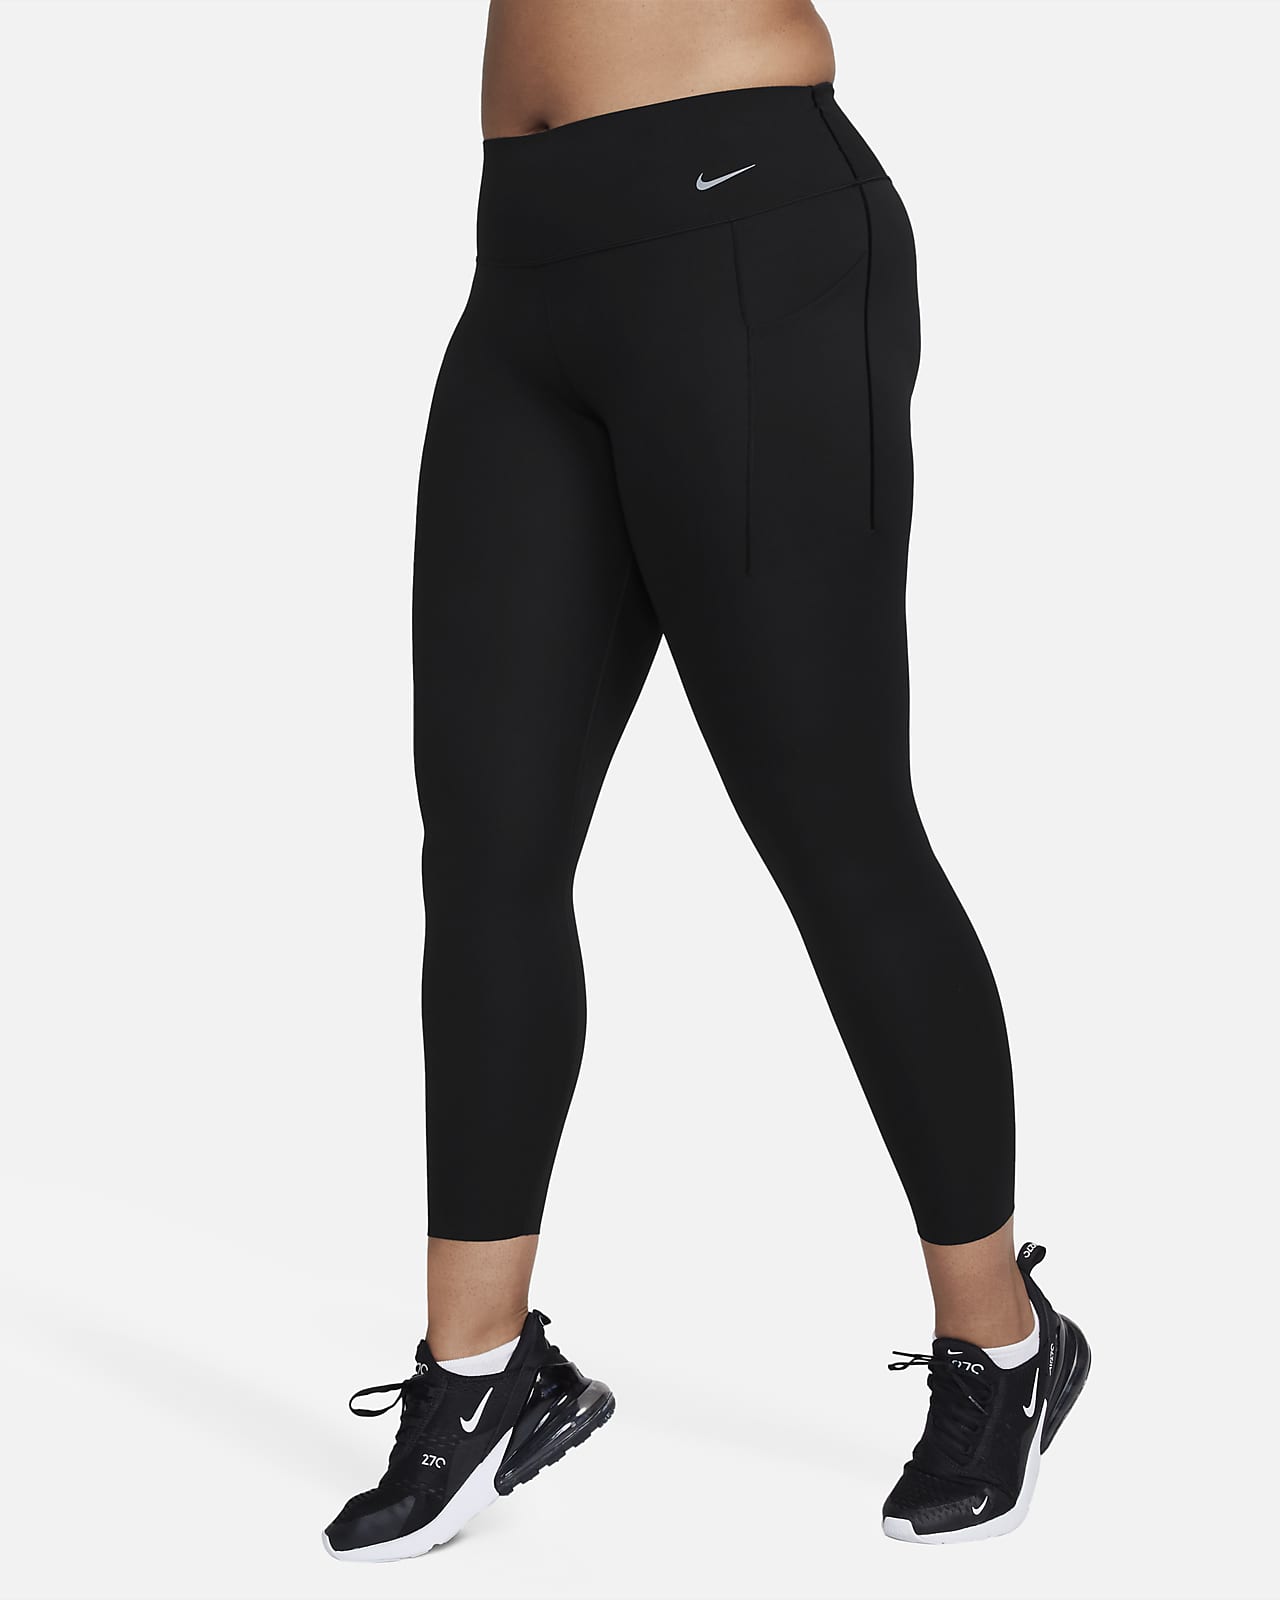 Nike Universa Women\'s Medium-Support with Leggings Pockets. Mid-Rise 7/8